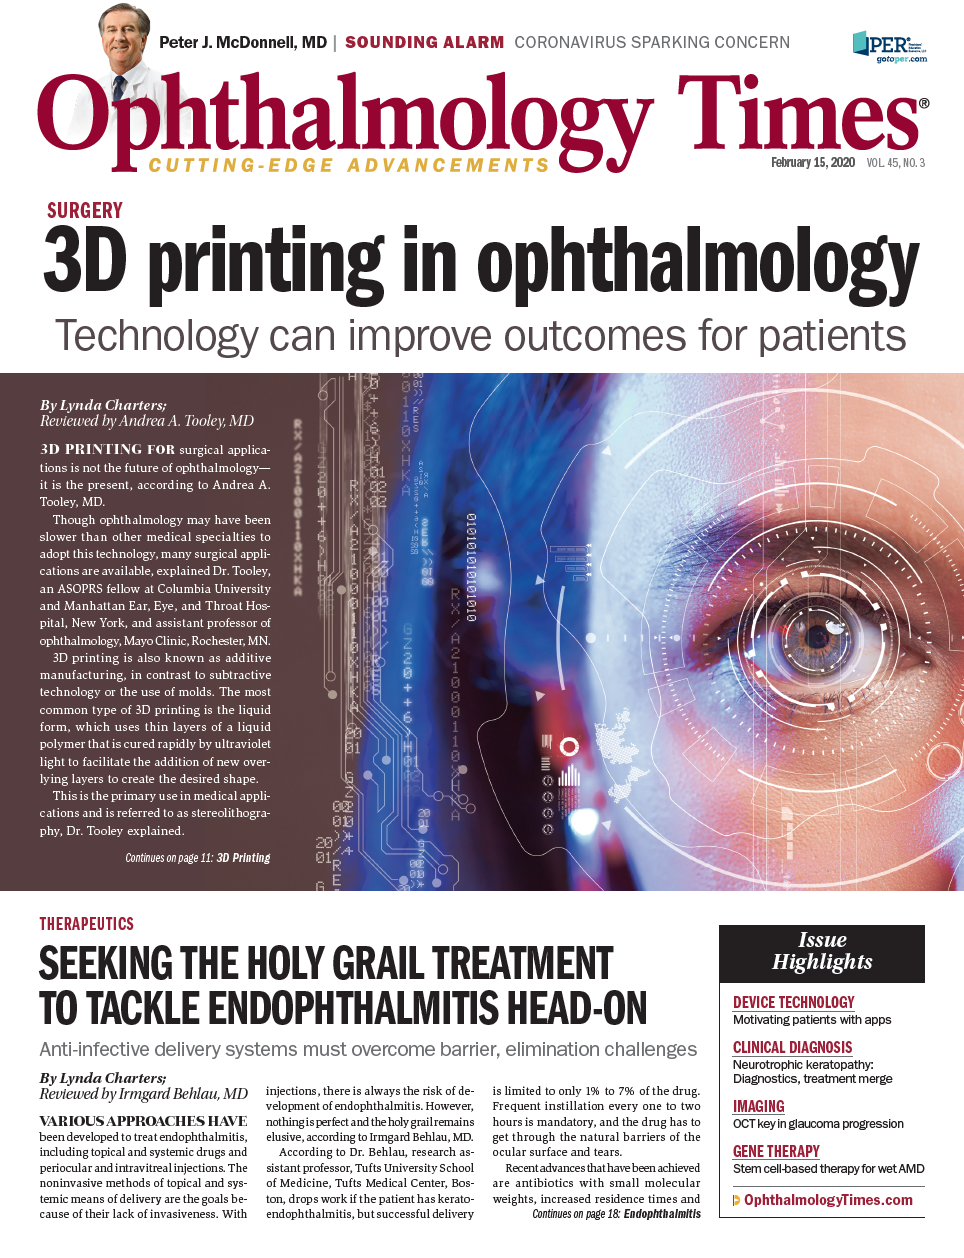 Ophthalmology Times: Feb. 15, 2020